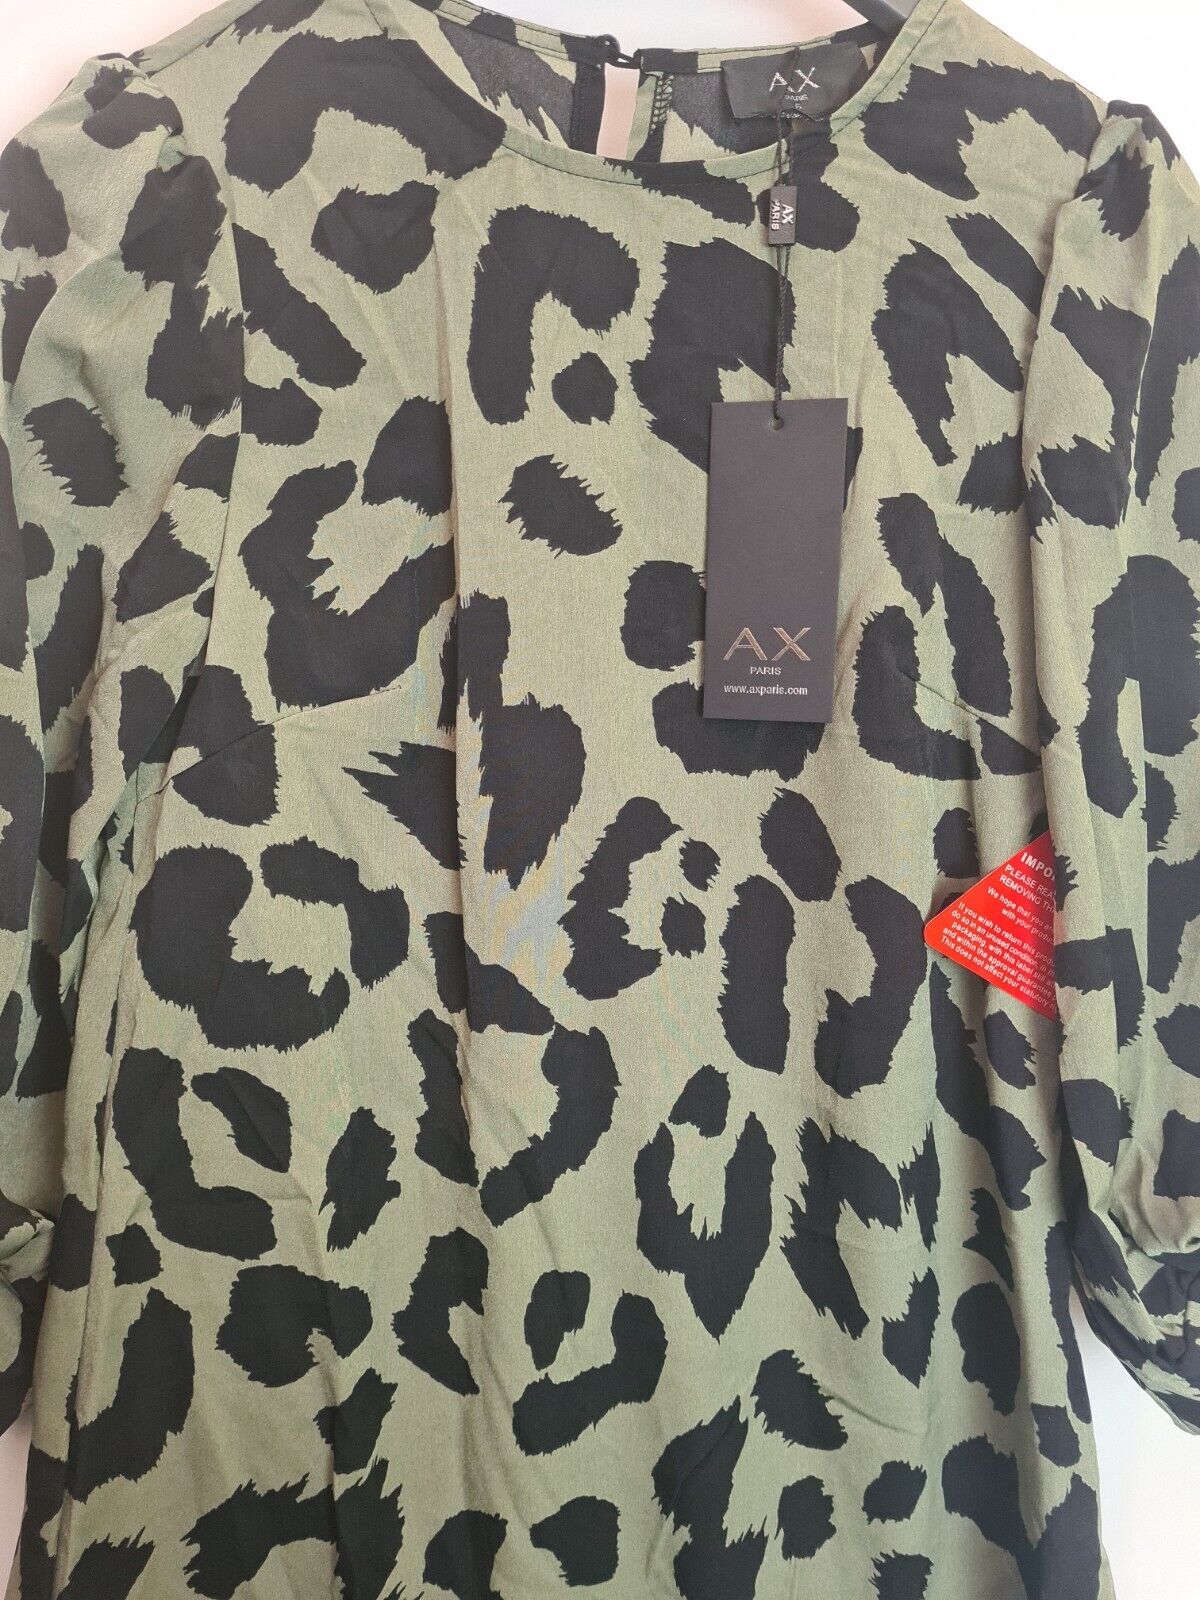 AX Paris Khaki Animal Frill Hem Shift Dress Size 6 **** V35